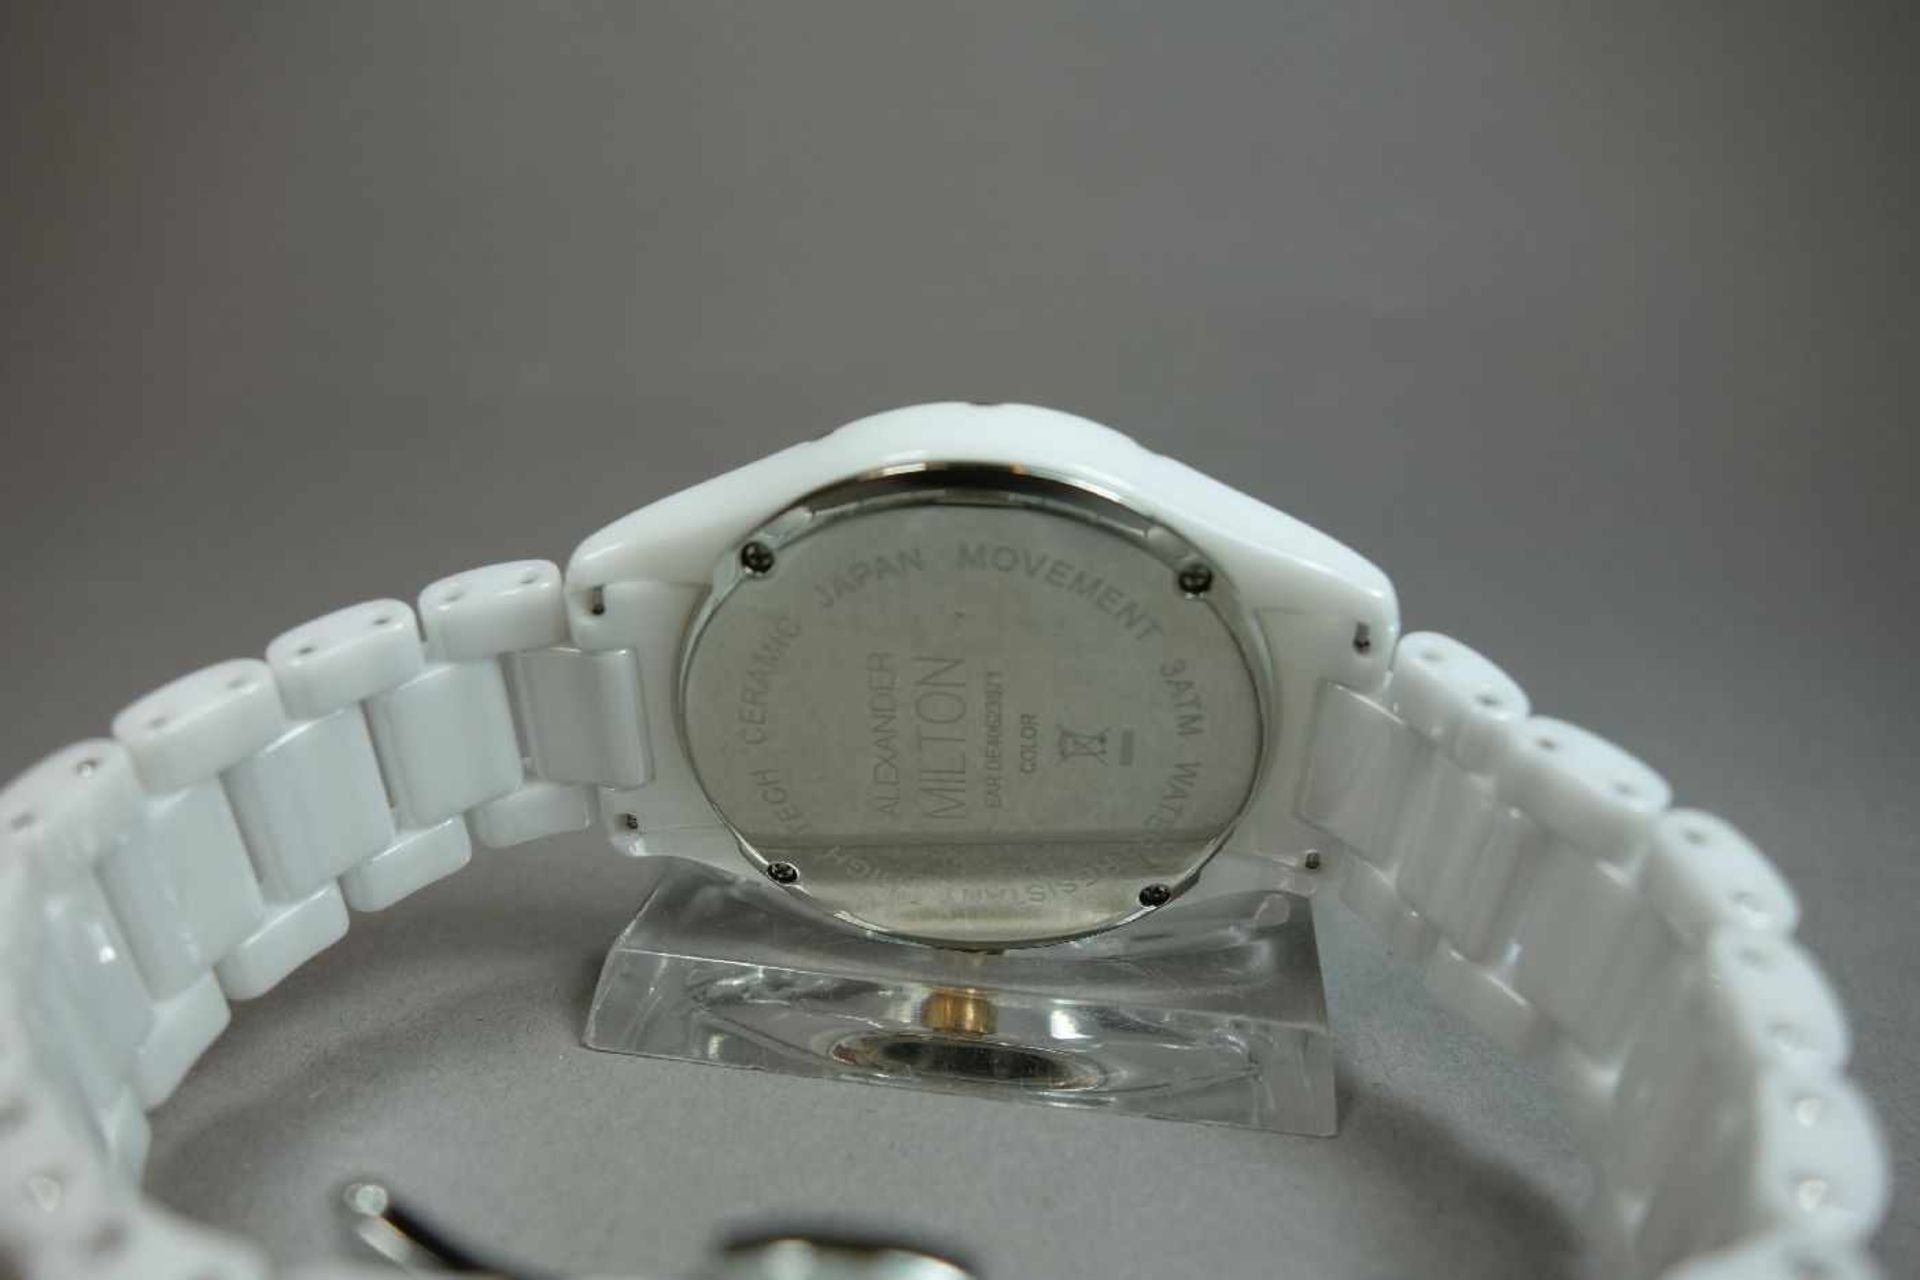 KERAMIK-ARMBANDUHR ALEXANDER MILTON / wristwatch, Quarz-Uhr, Manufaktur Alexander Milton / - Image 4 of 5